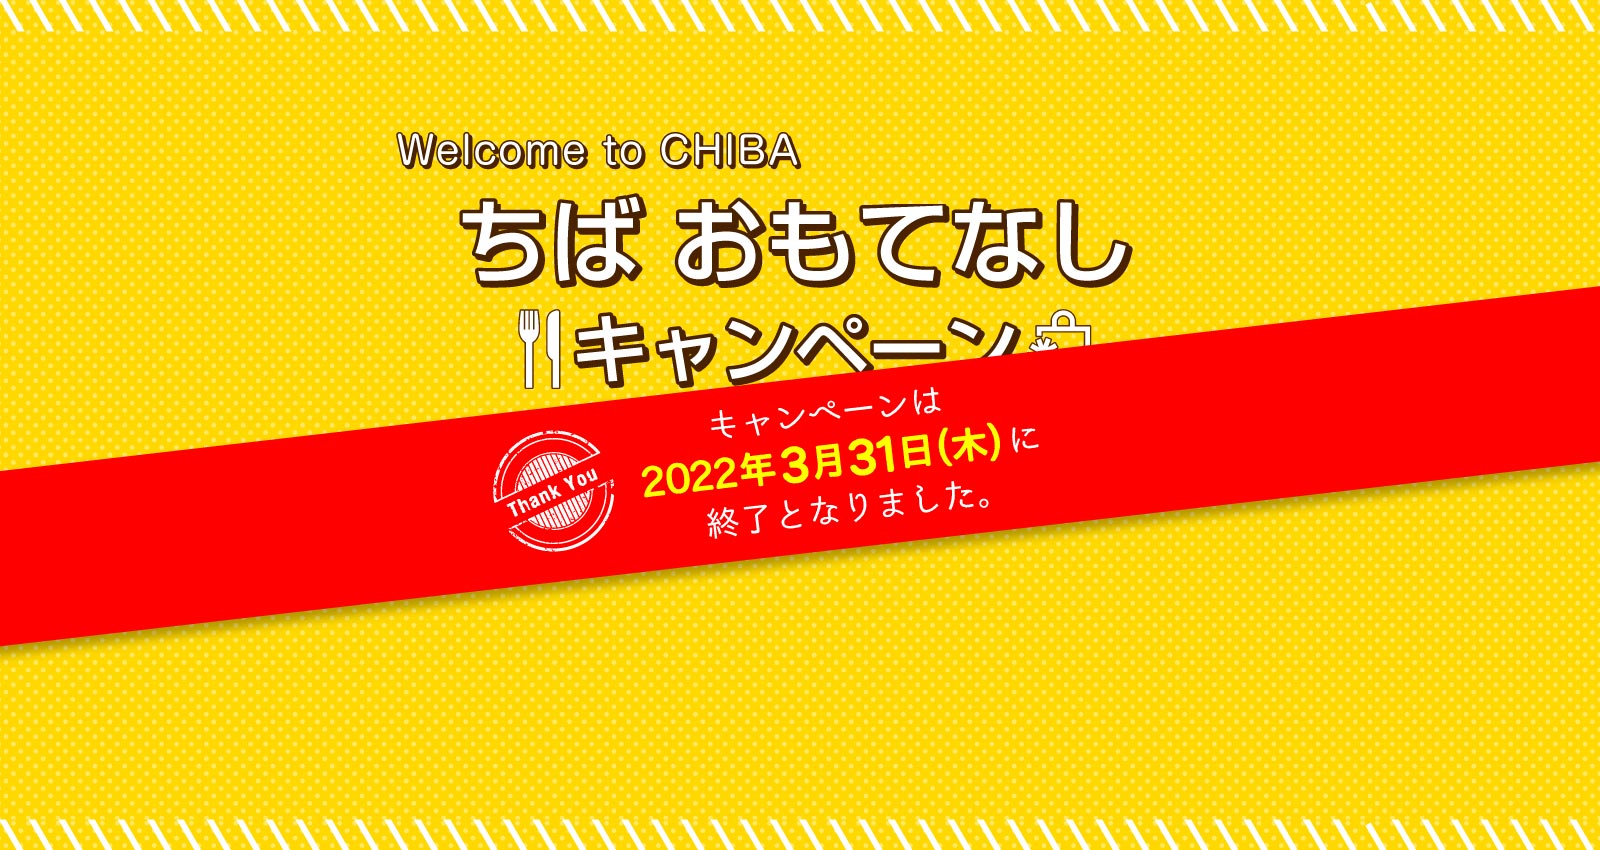 Welcome to CHIBA 宿泊者に３つの特典付き！ちば おもてなしキャンペーン｜2022年3月31日(木)に終了となりました。